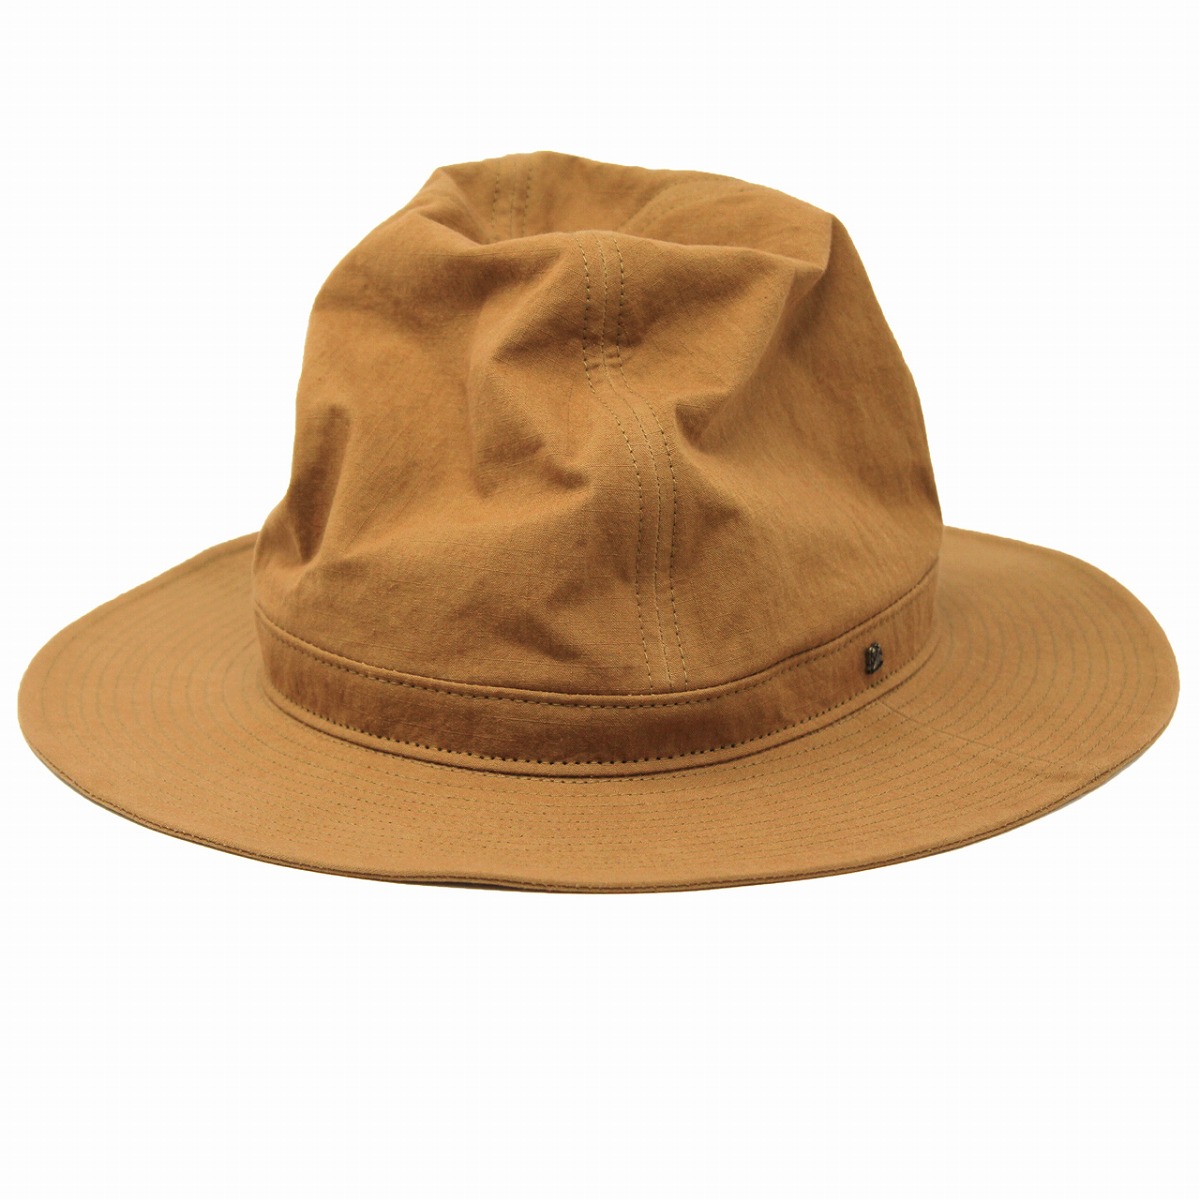 Mountain Man Felt Hat